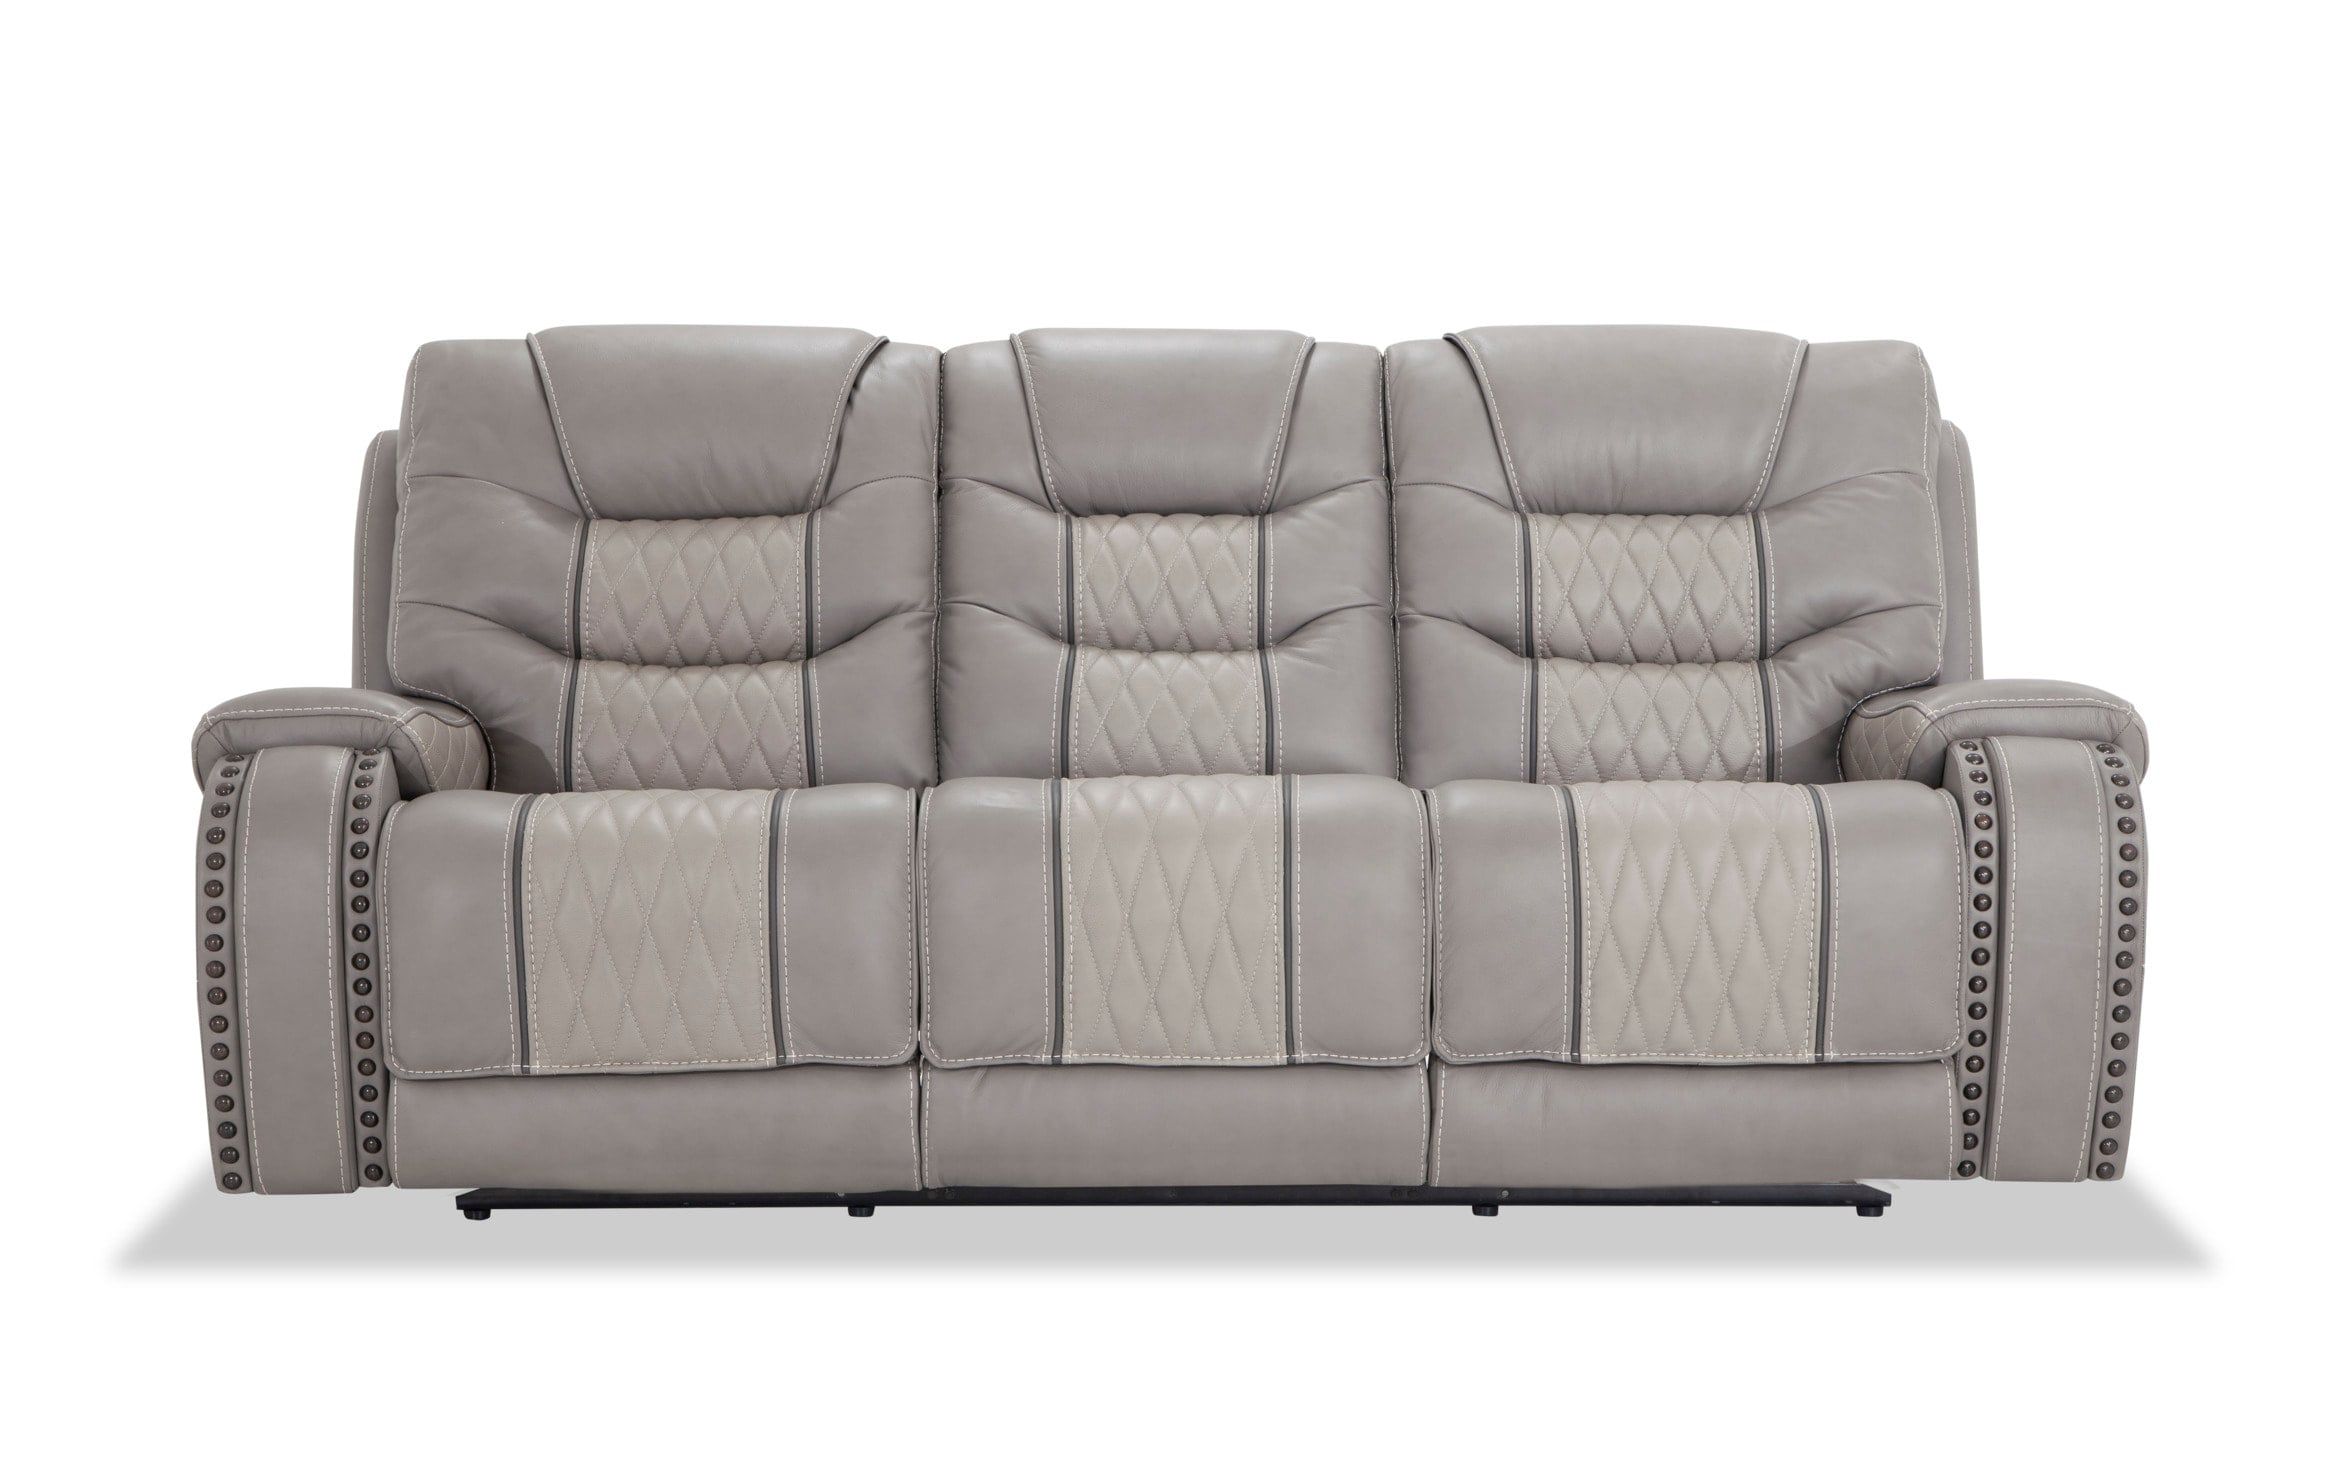 Bobs Furniture Leather Sofa : Trailblazer Gray Leather With Regard To Trailblazer Gray Leather Power Reclining Sofas (View 3 of 15)